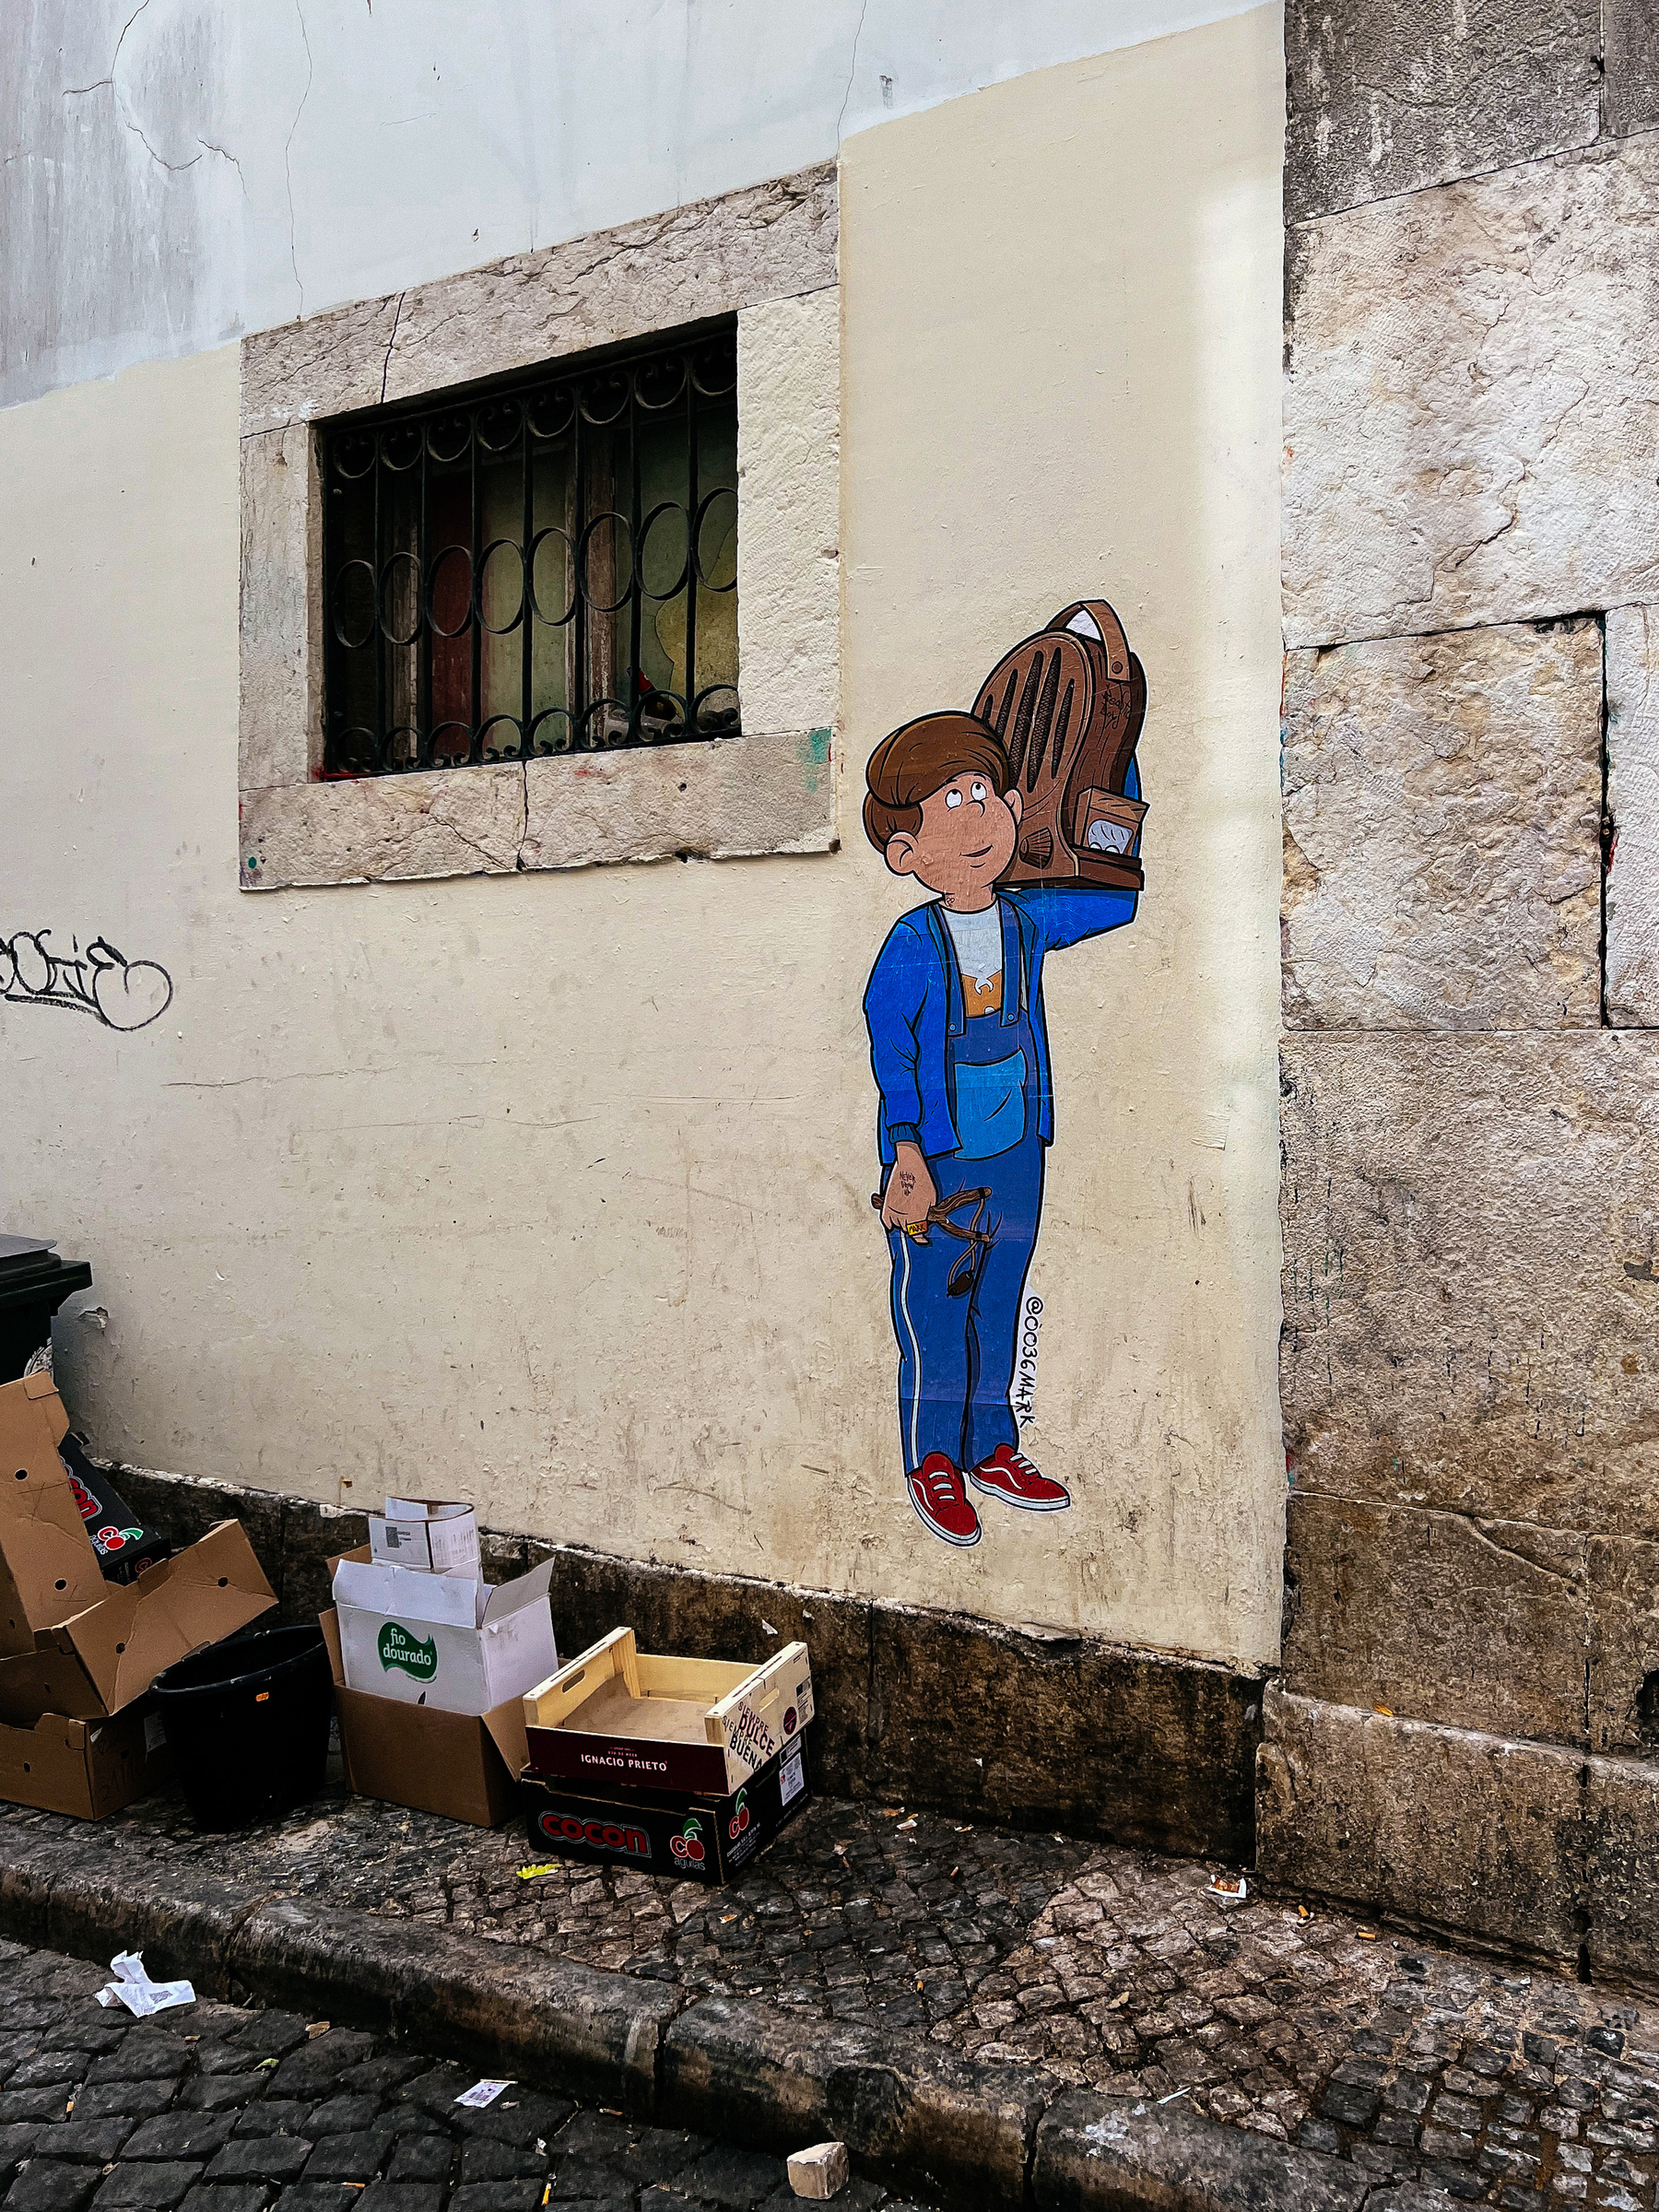 street art on a corner, a boy holding a backpack